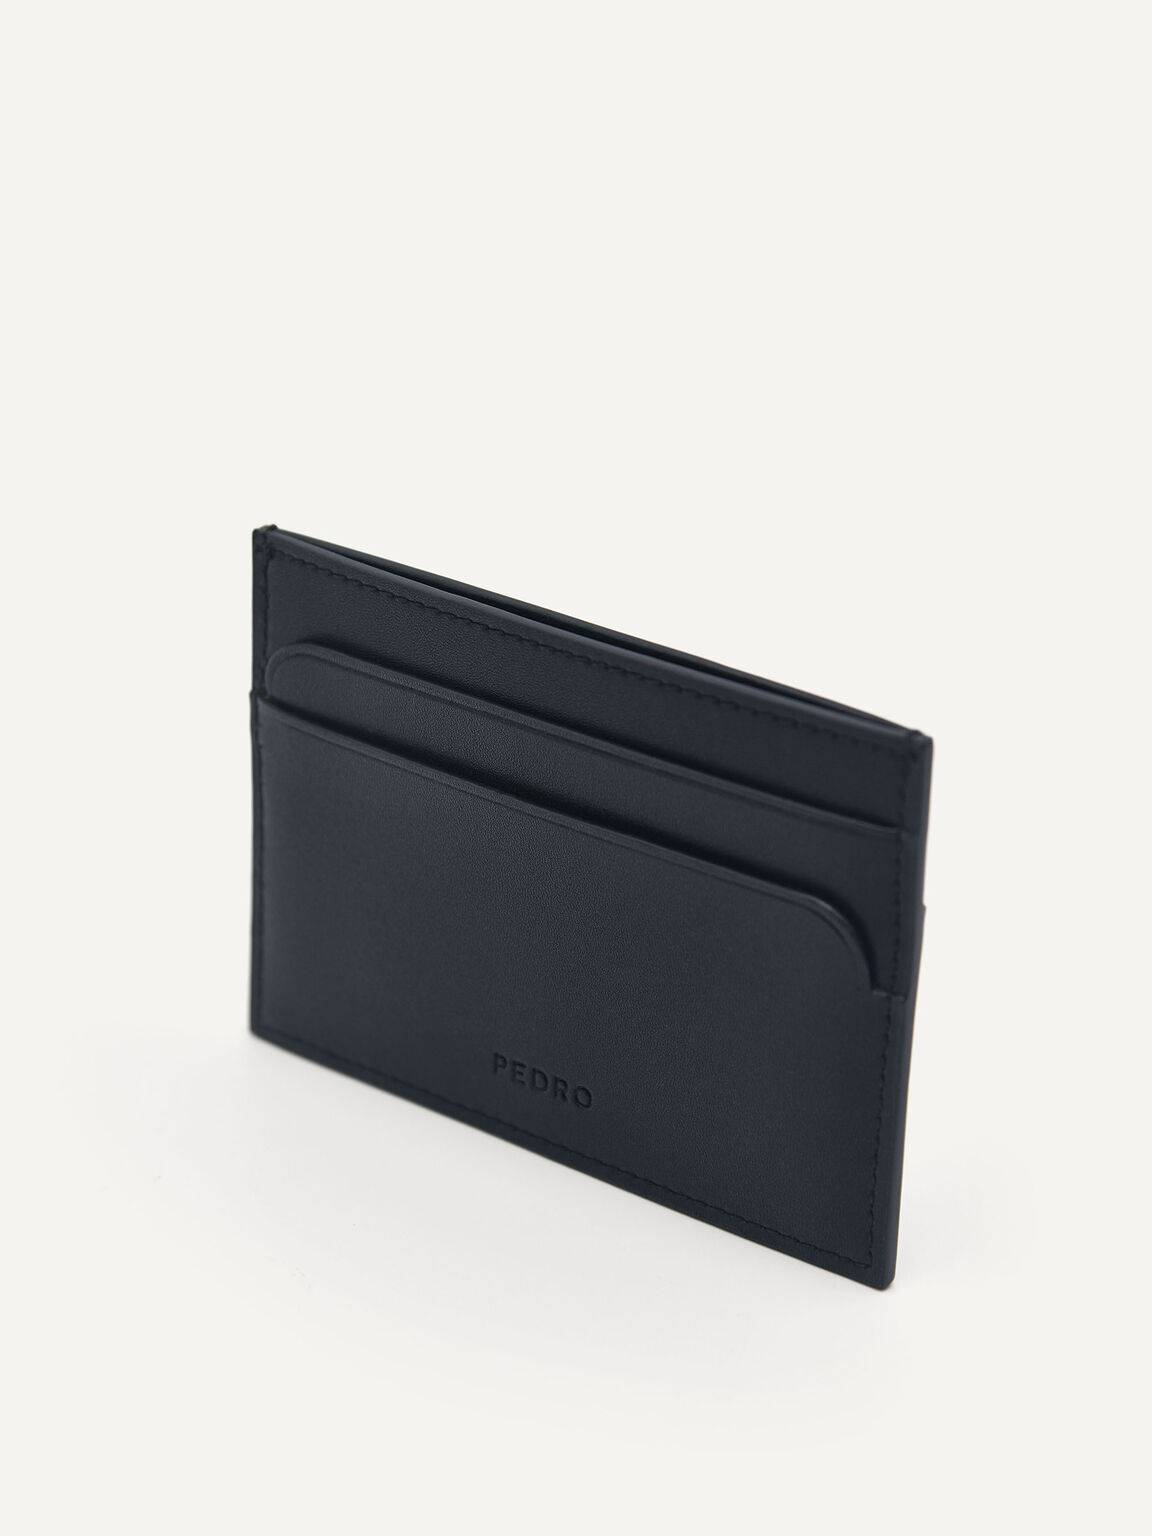 PEDRO Icon Mini Leather Card Holder, Black